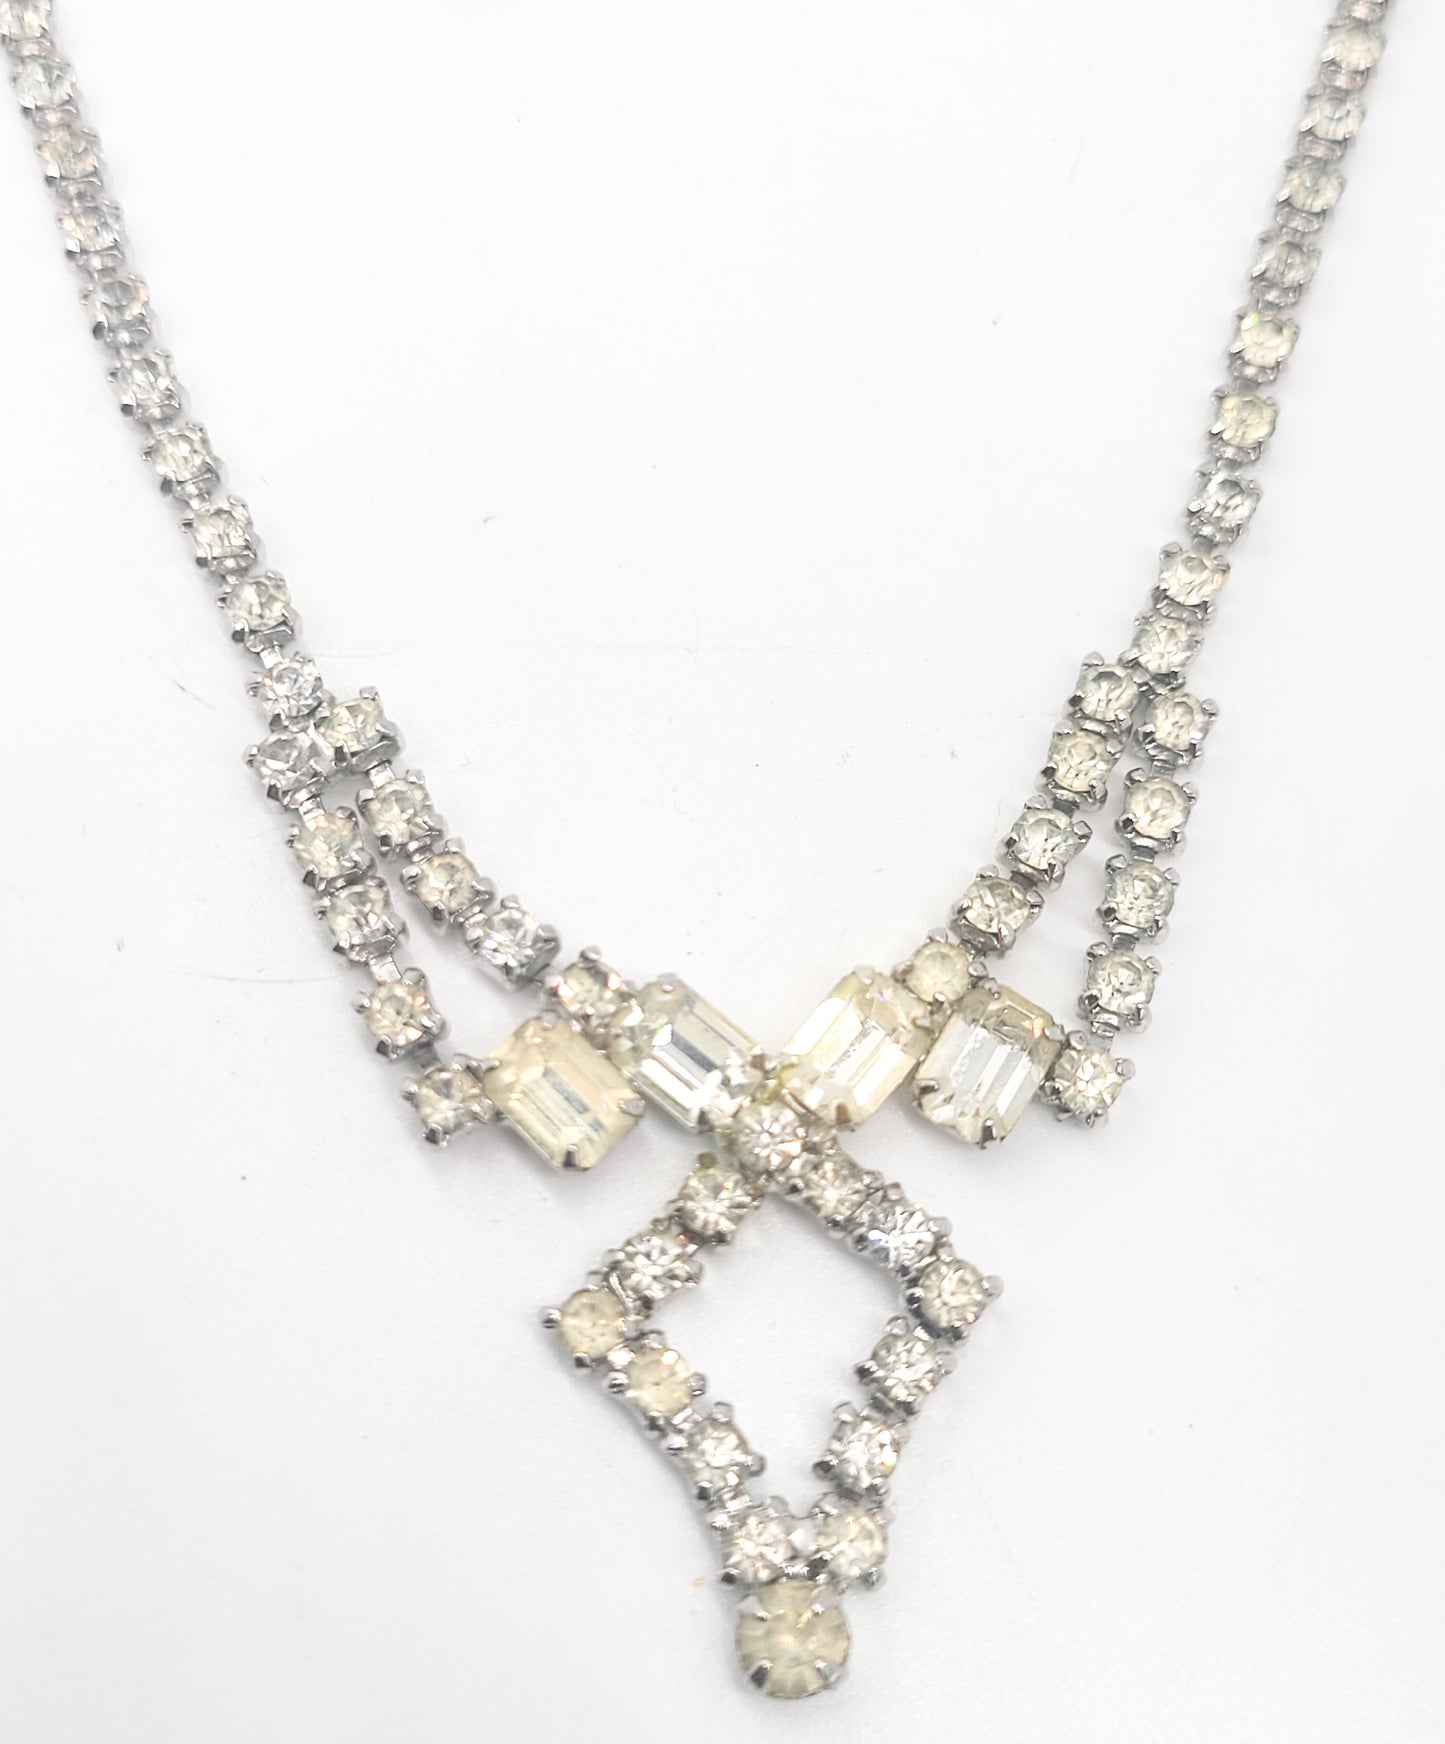 Vintage rhinestone drop choker bib necklace